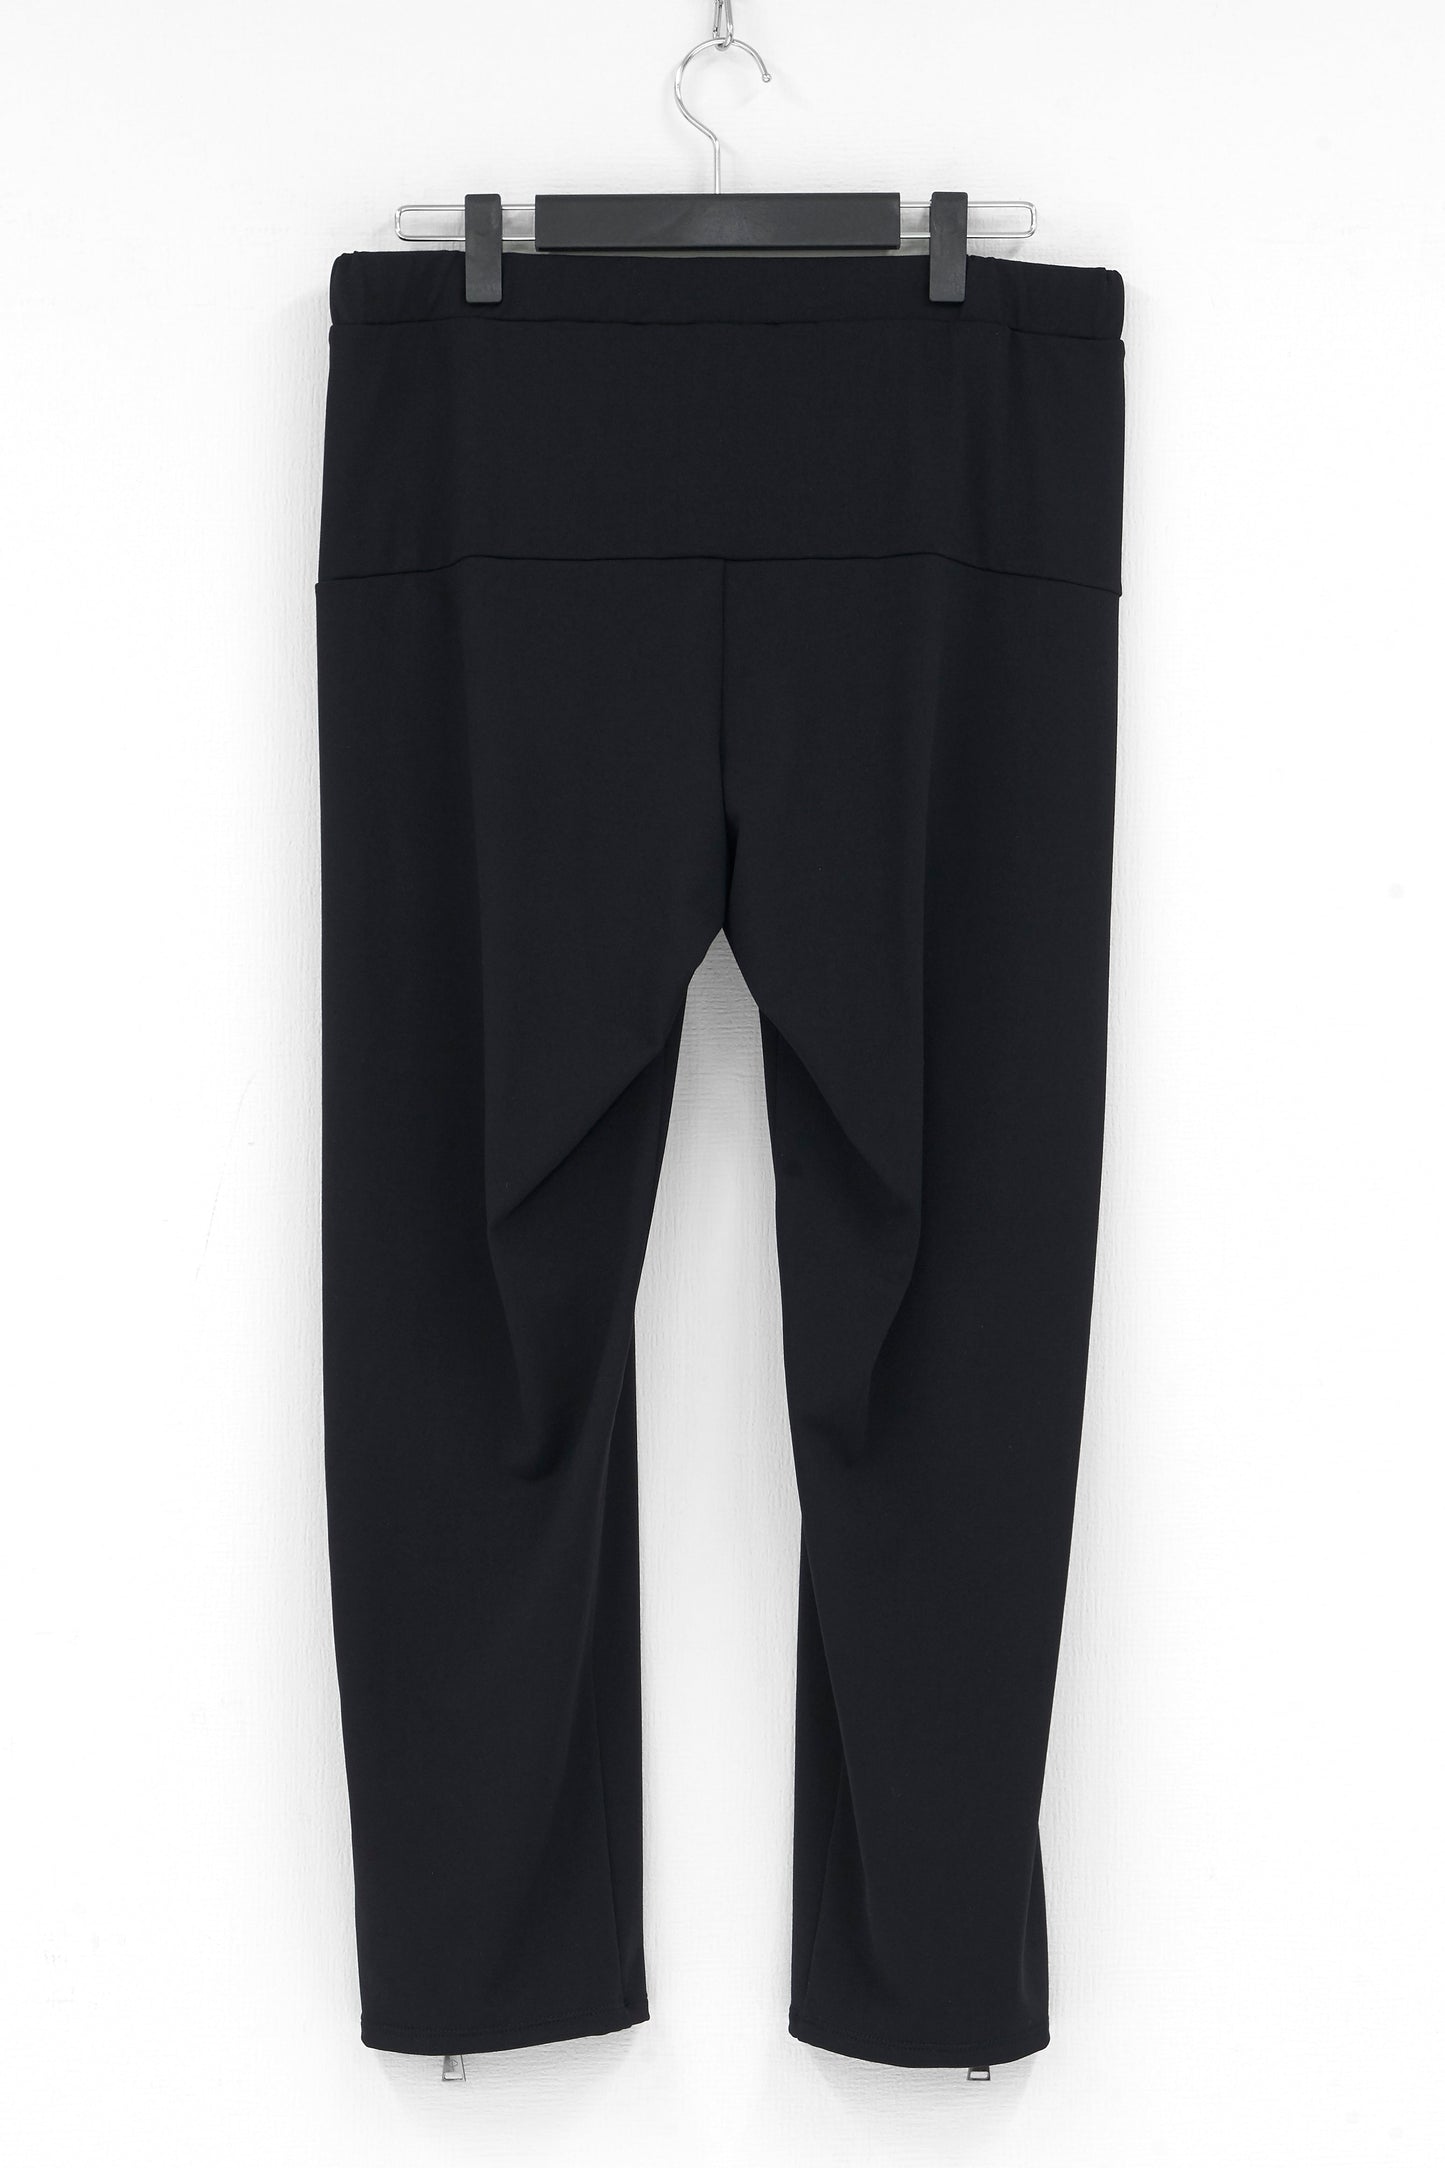 【SAMPLE】Jersey Pants / BLACK